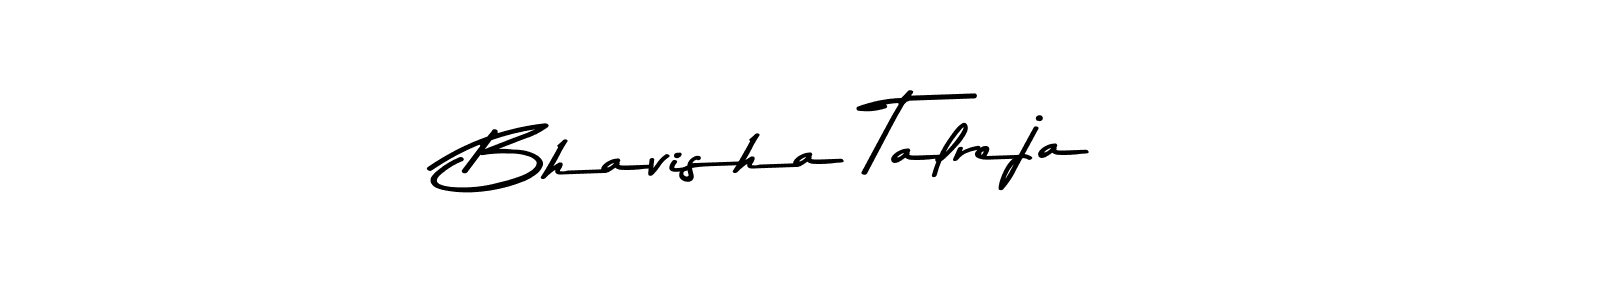 How to Draw Bhavisha Talreja signature style? Asem Kandis PERSONAL USE is a latest design signature styles for name Bhavisha Talreja. Bhavisha Talreja signature style 9 images and pictures png